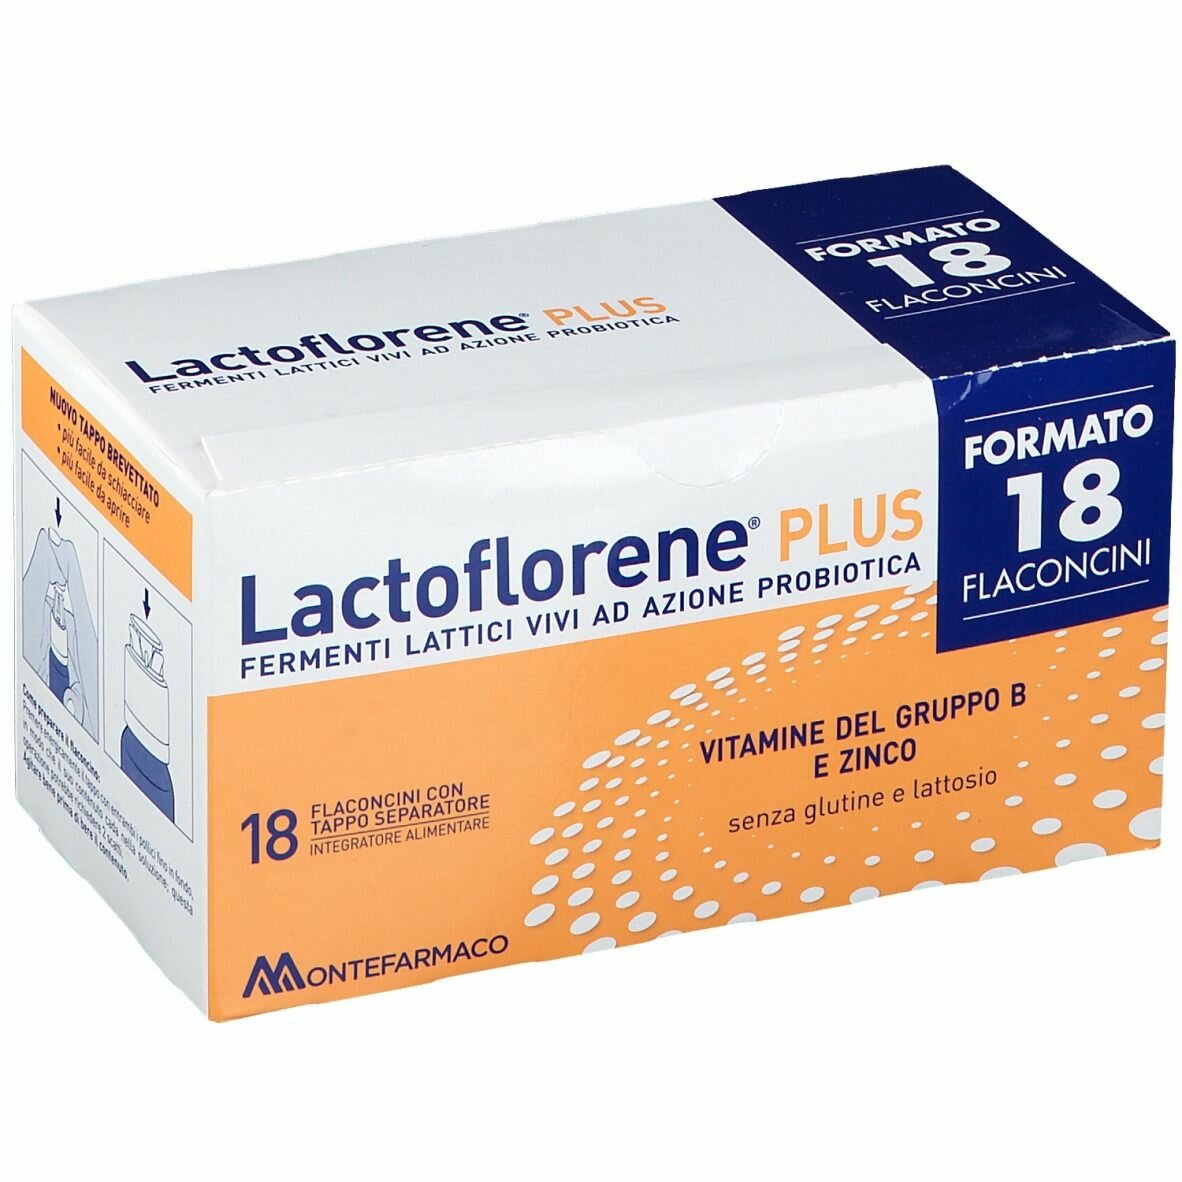 Lactoflorene Plus Fermenti Lattici Vivi 18 flaconcini 180 ml.